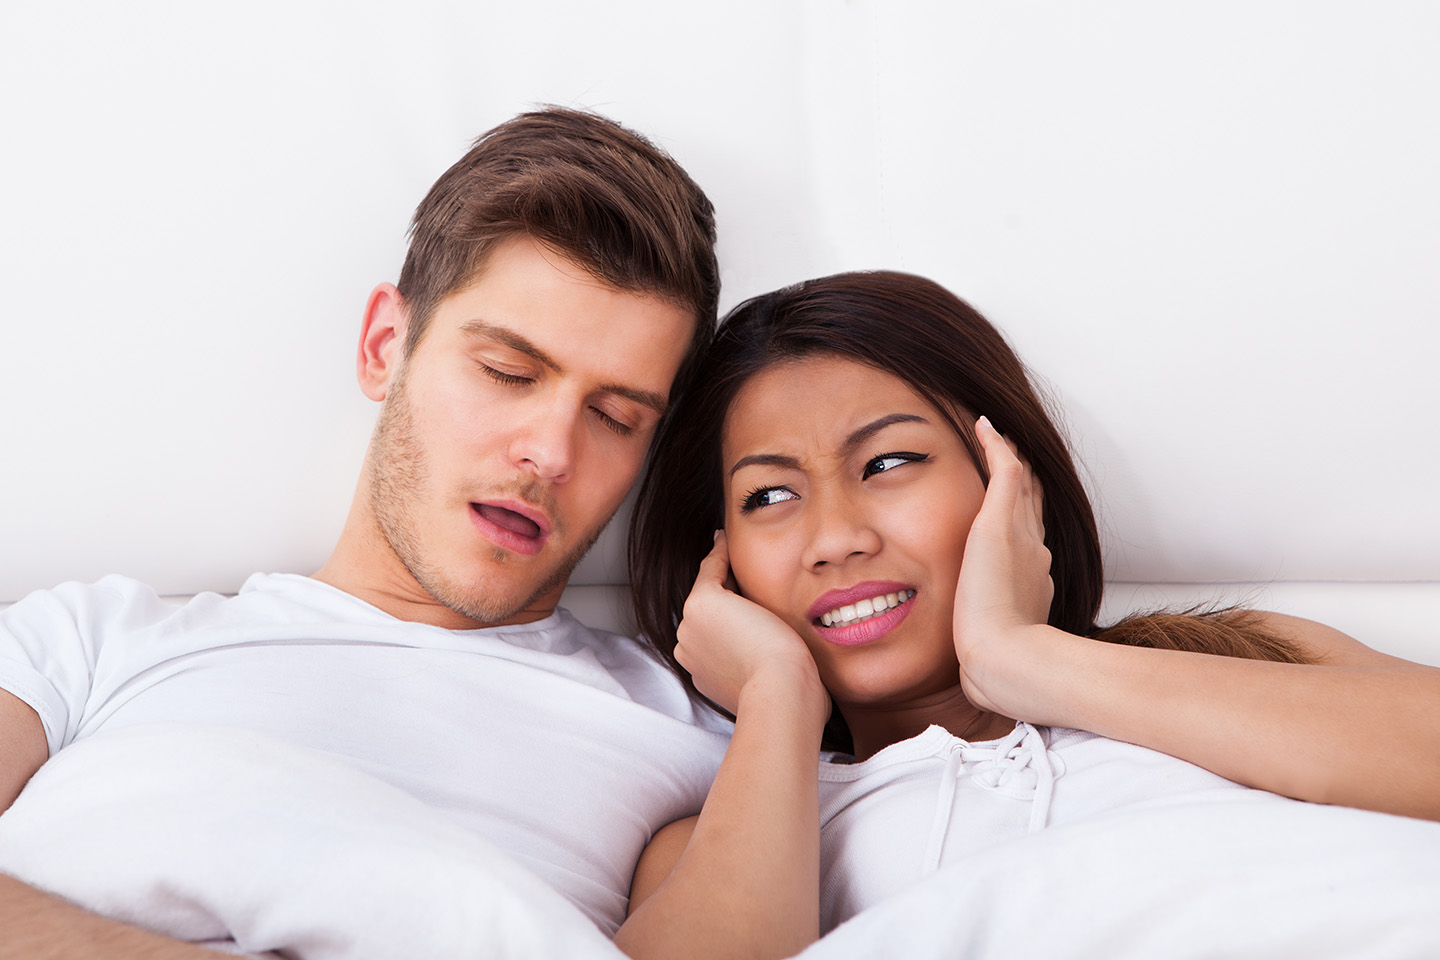 Couple sleeping while wife is awake muffling her ears.